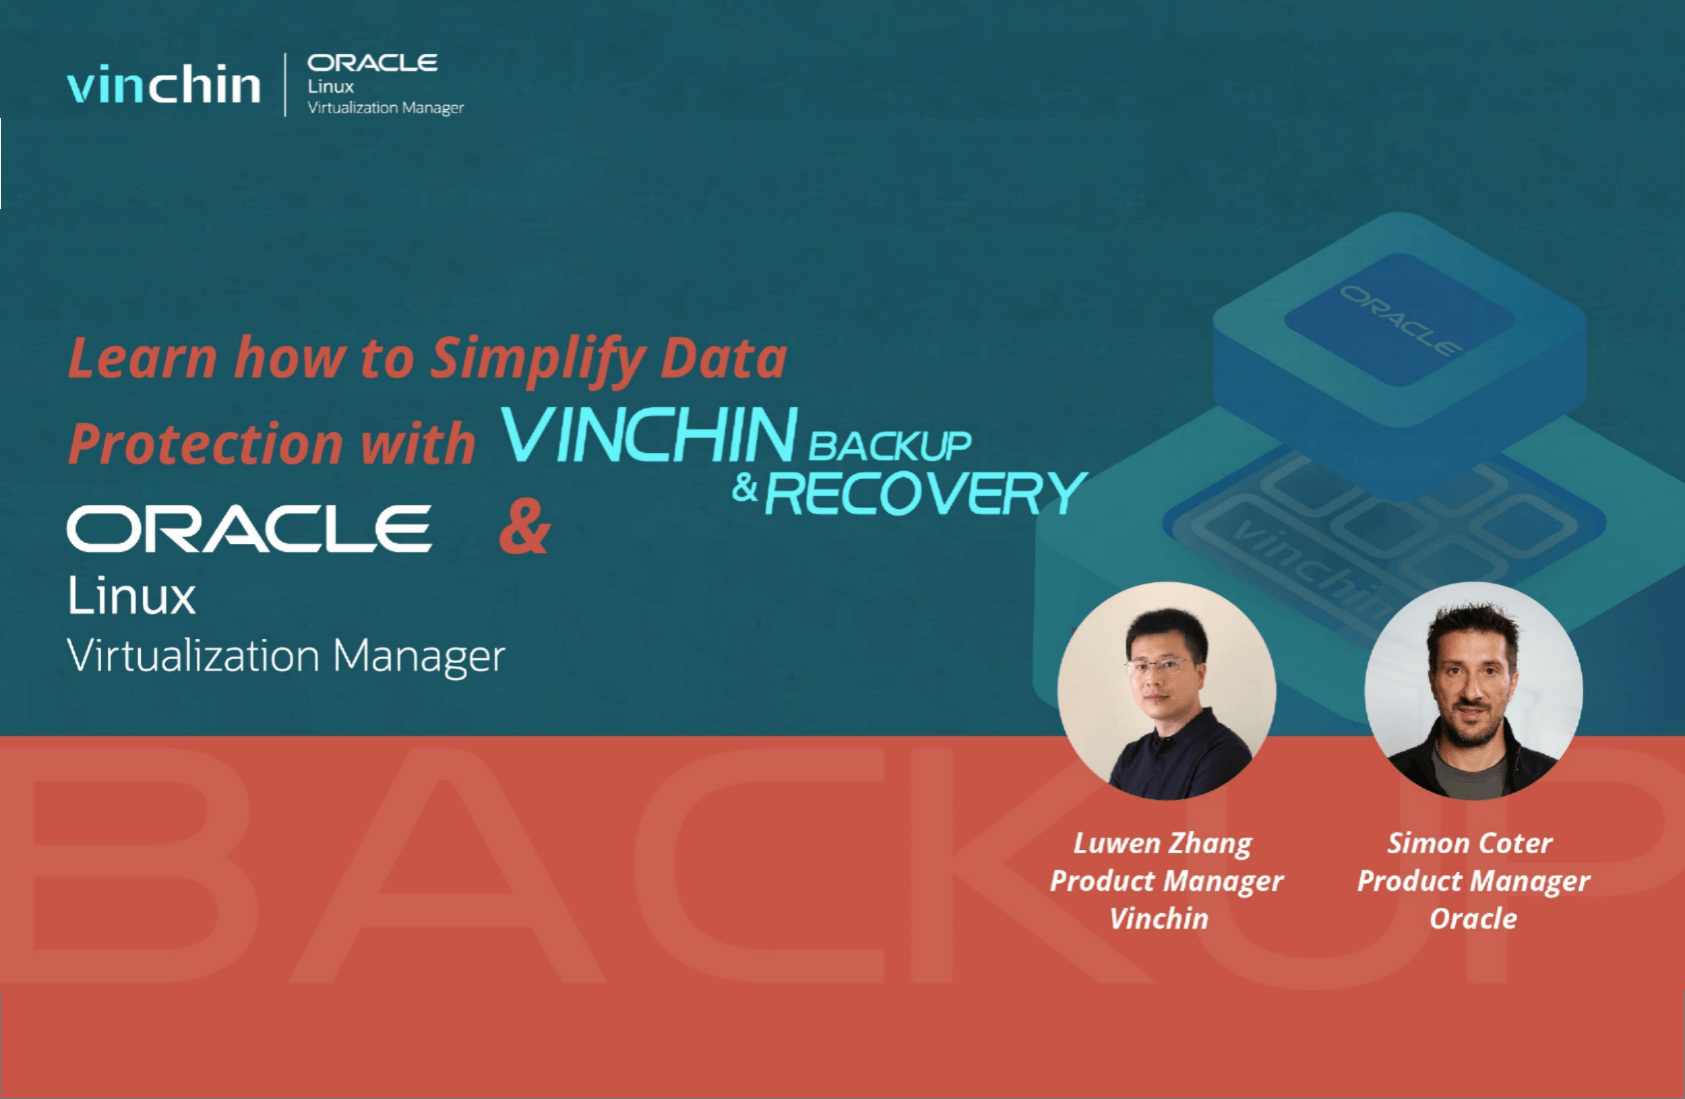 Vinchin × Oracle | Saiba Como Simplificar a Proteção de Dados com Vinchin Backup & Recovery e Oracle Linux Virtualization Manager